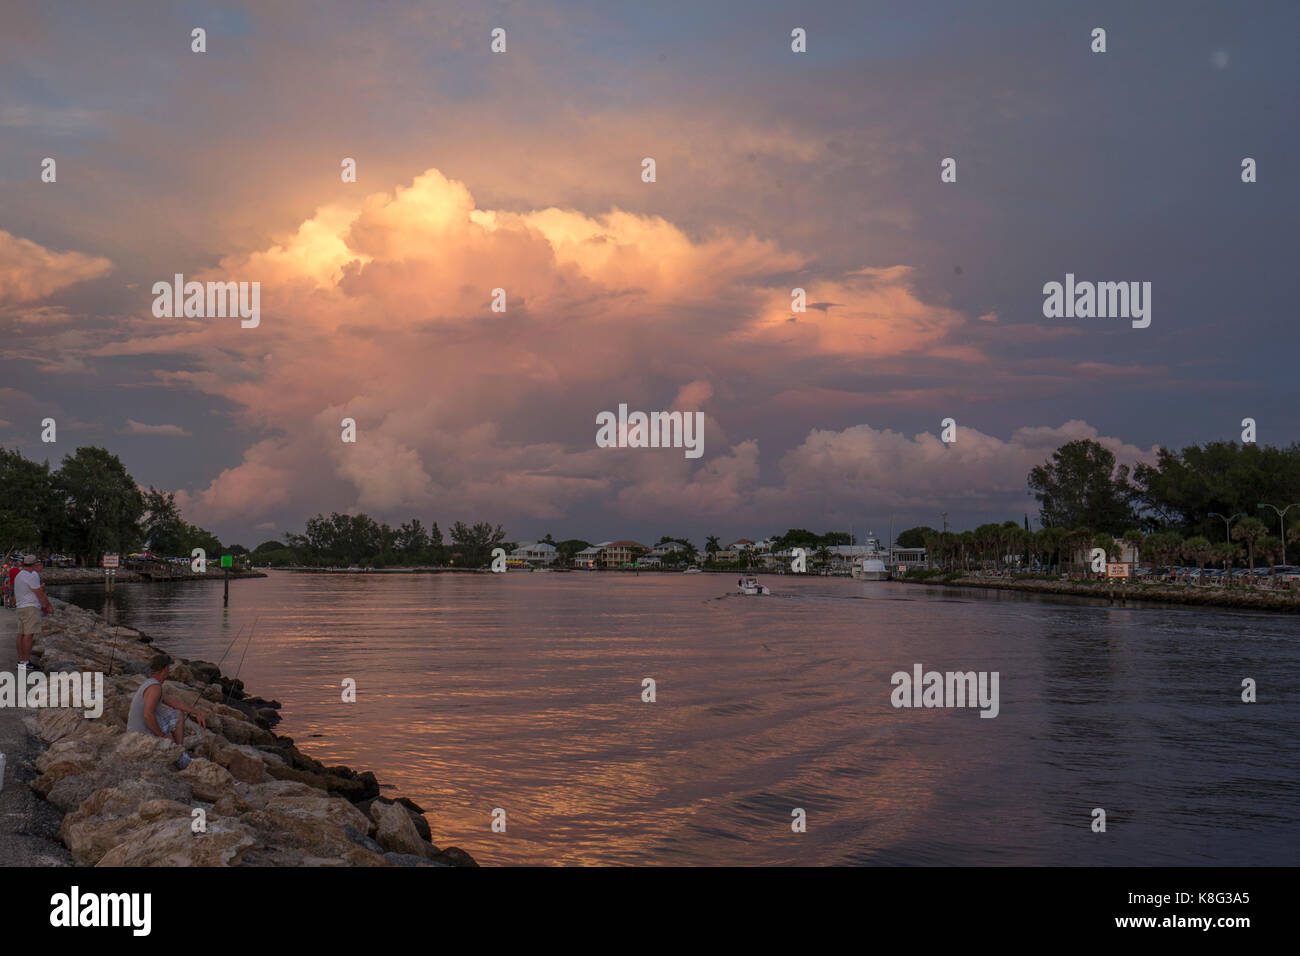 Nubes de tormenta sobre Venecia en el sudoeste de Florida Foto de stock